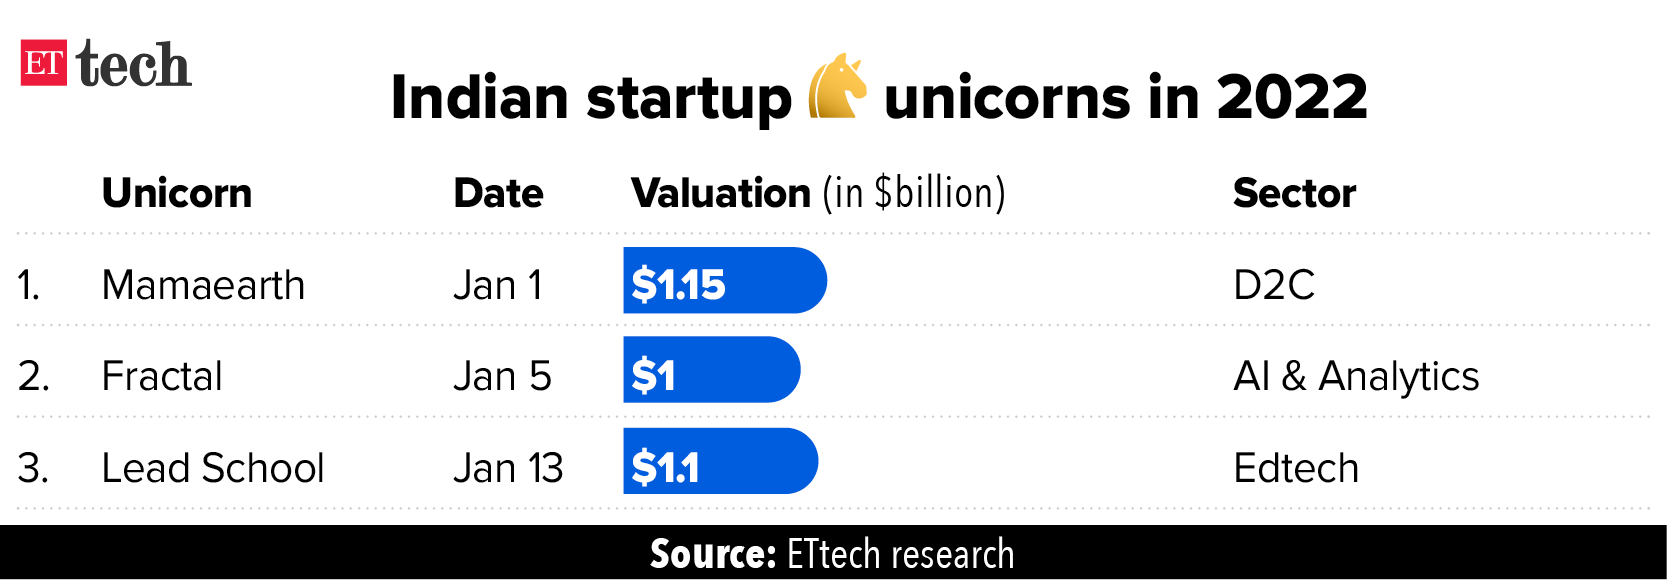 Indian startup unicorns in 2022